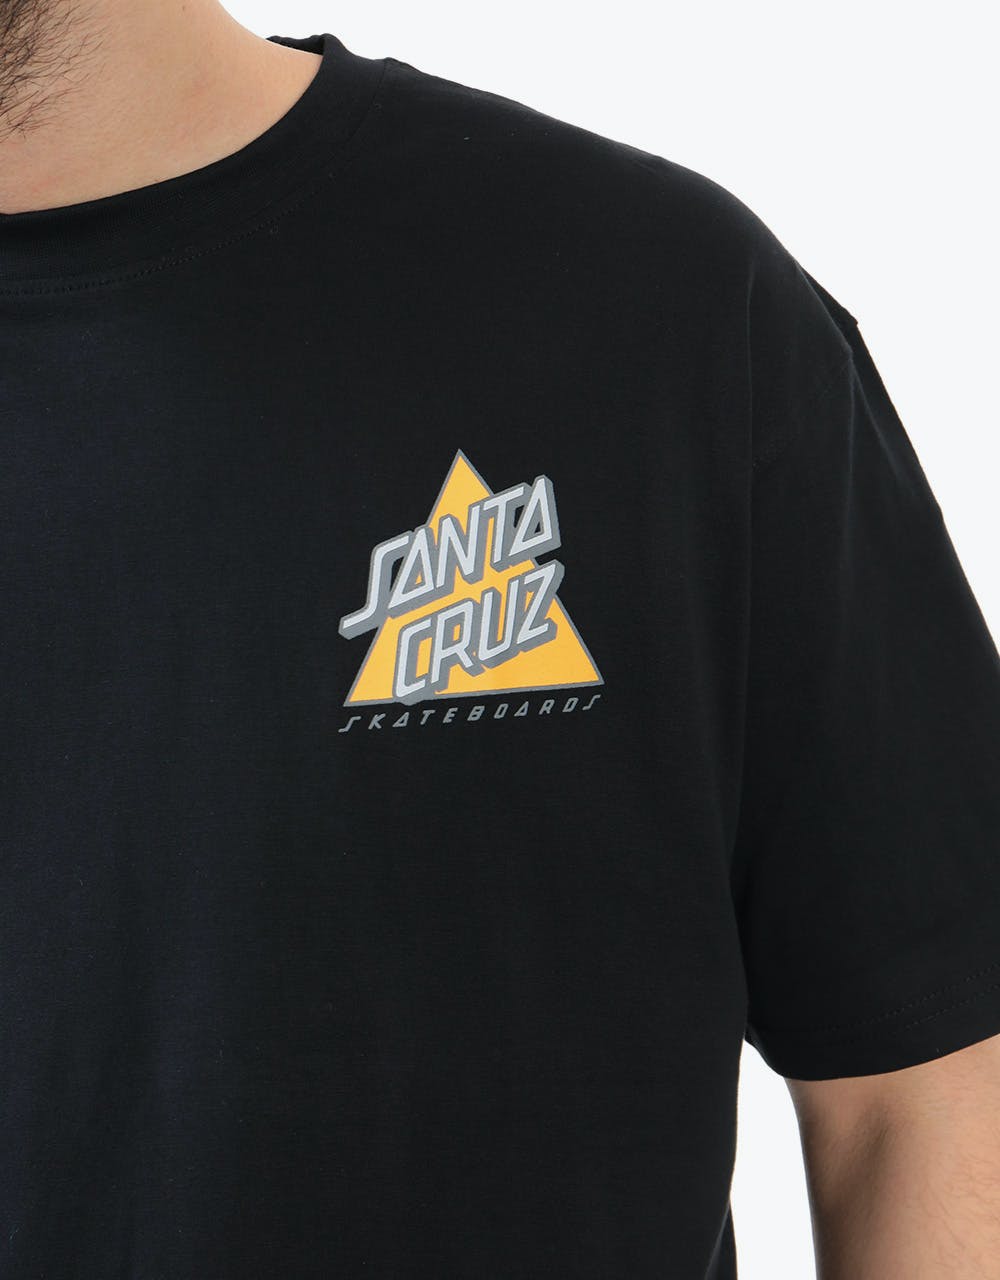 Santa Cruz Not a Dot T-Shirt - Black